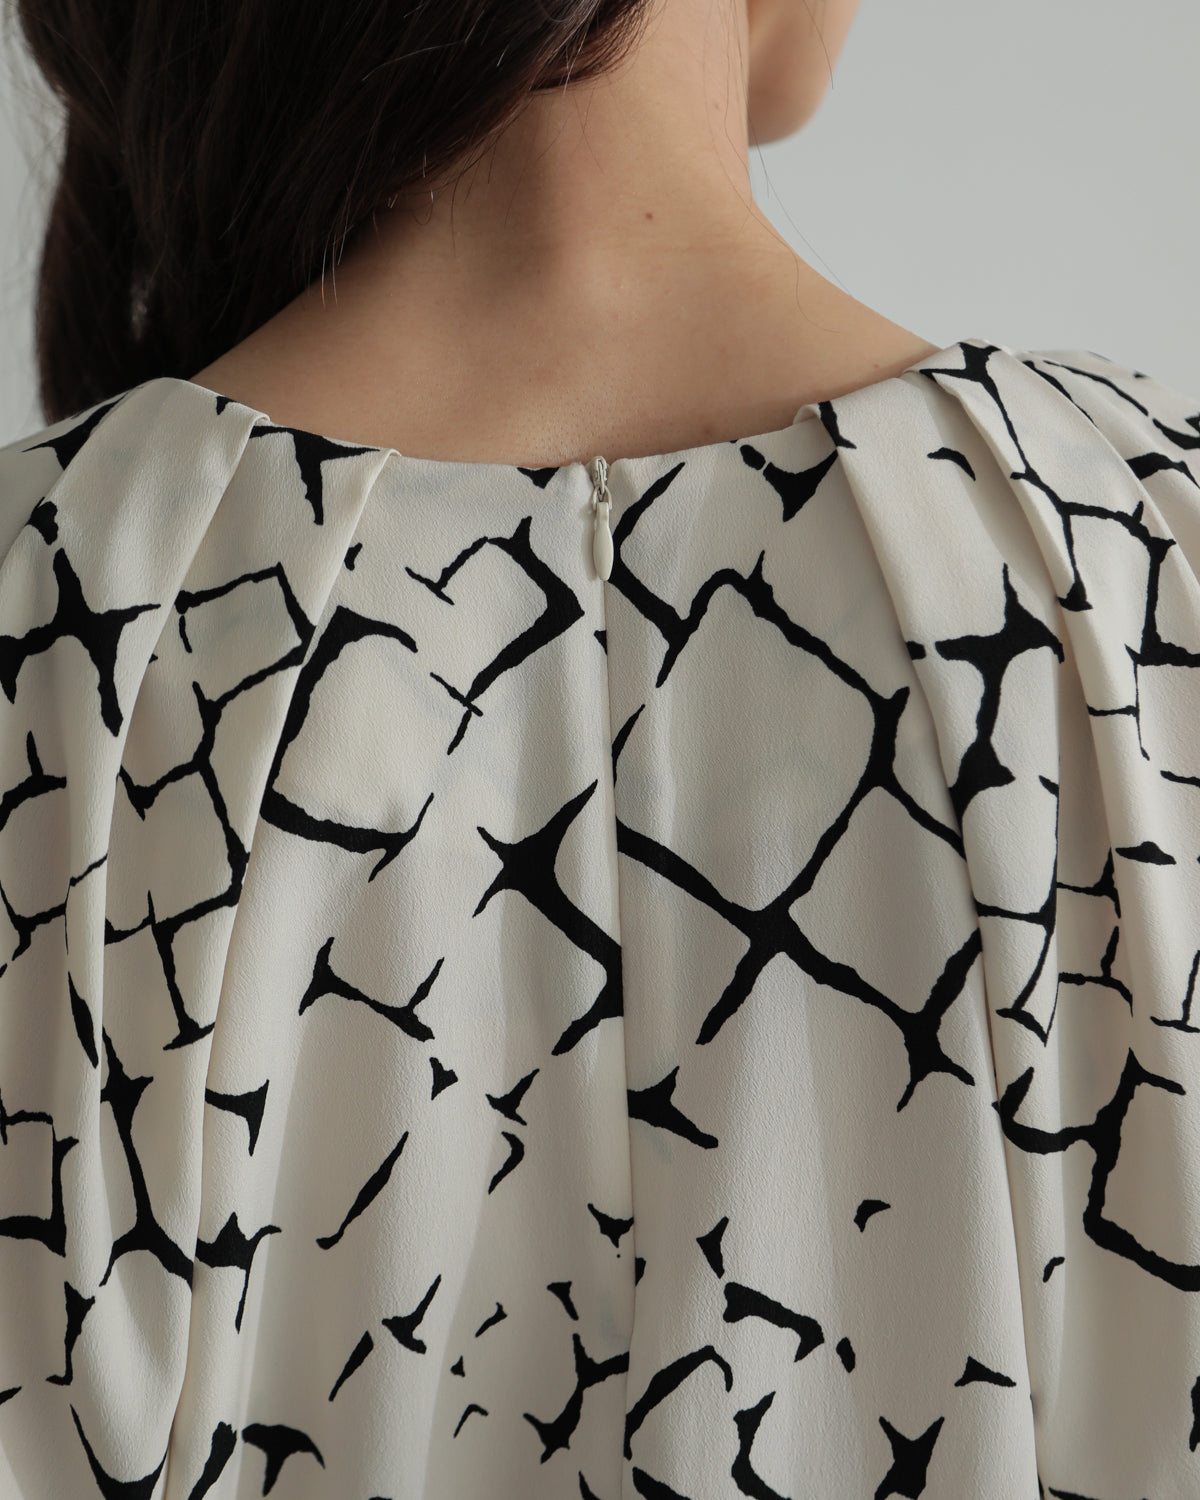 giraffe print blouse